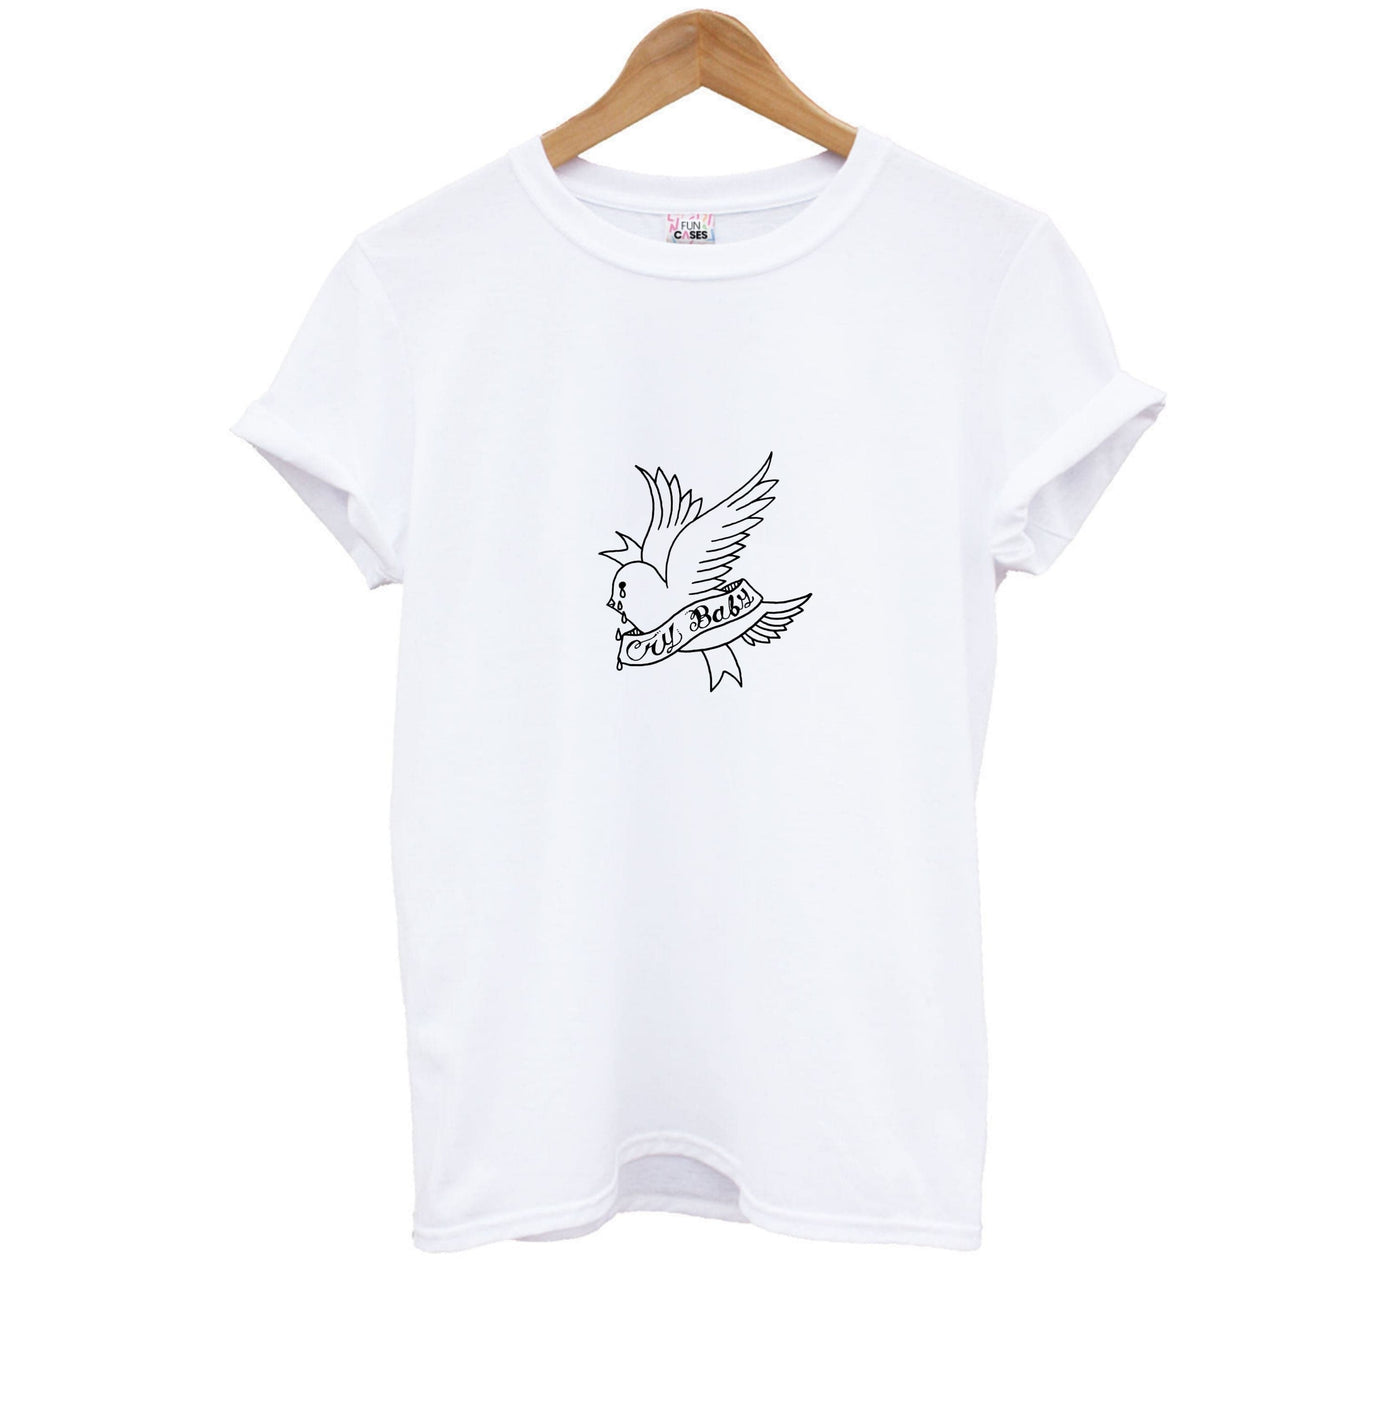 Cry Baby Bird - Lil Peep Kids T-Shirt